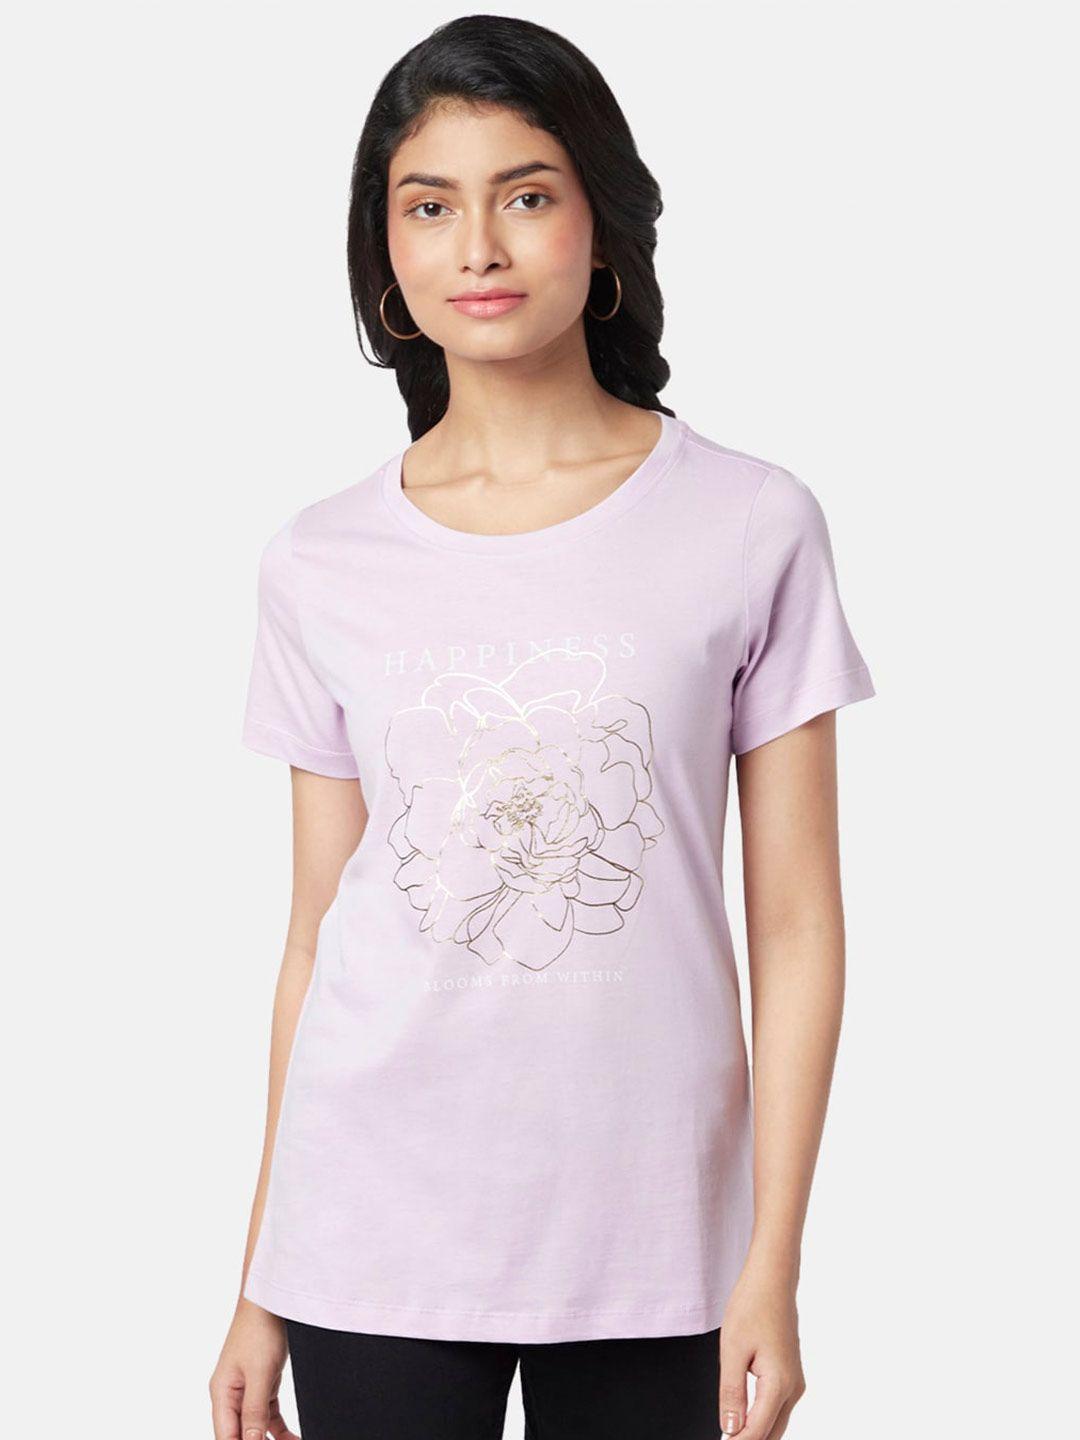 honey-by-pantaloons-women-printed-t-shirt